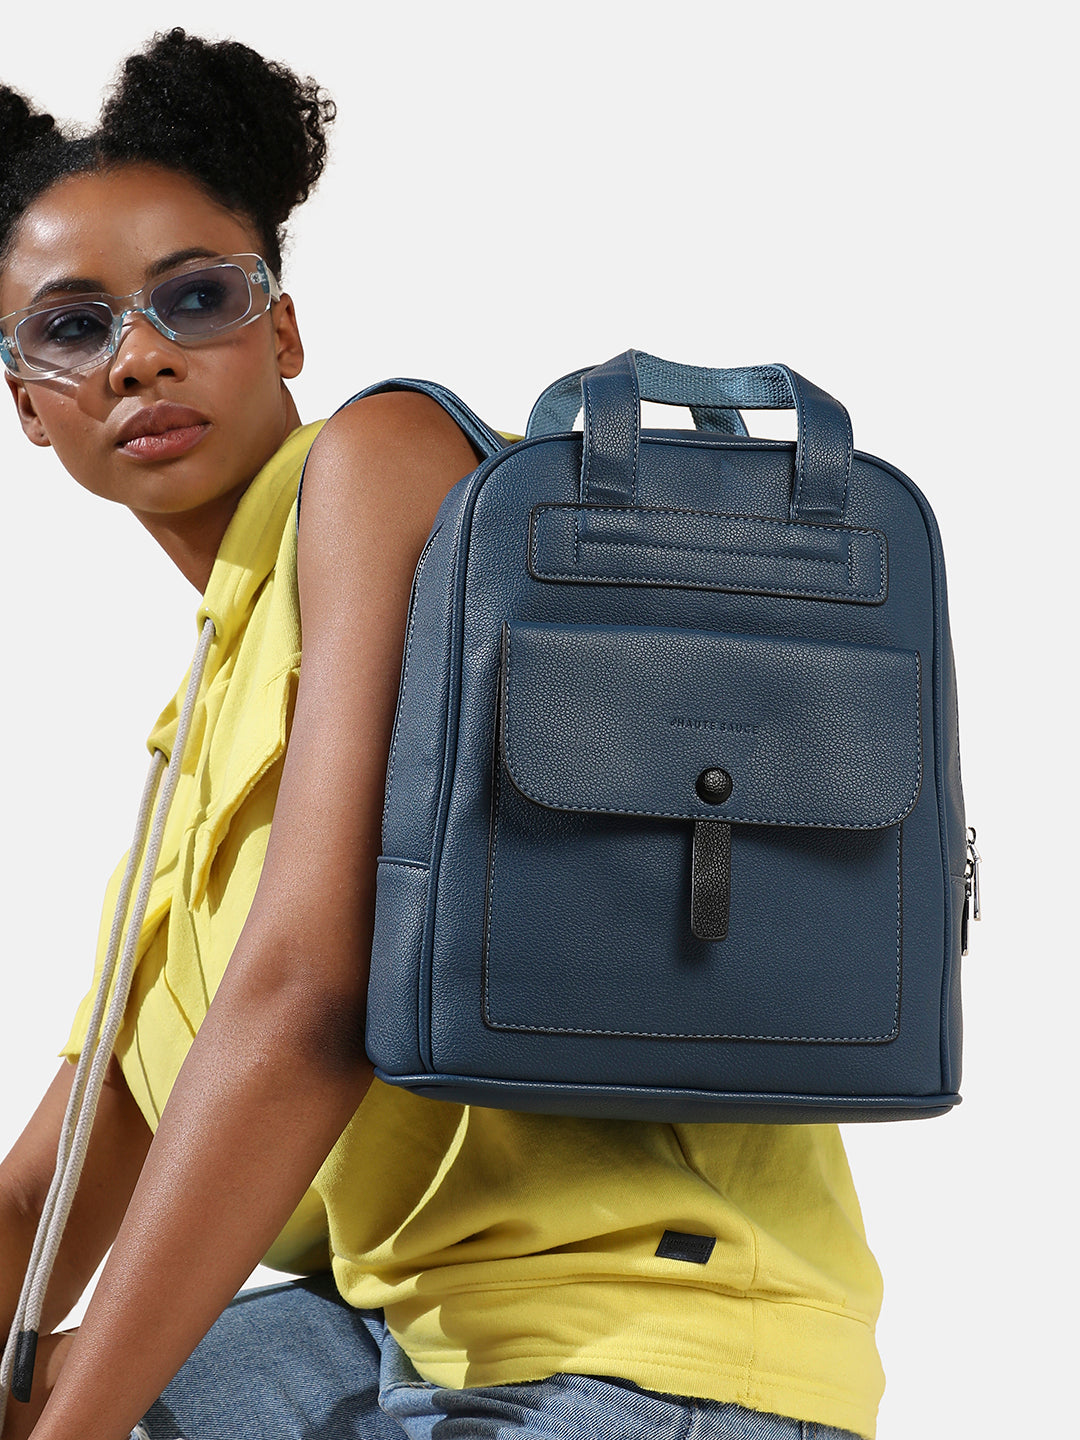 Top Handle Backpack - Indigo Blue